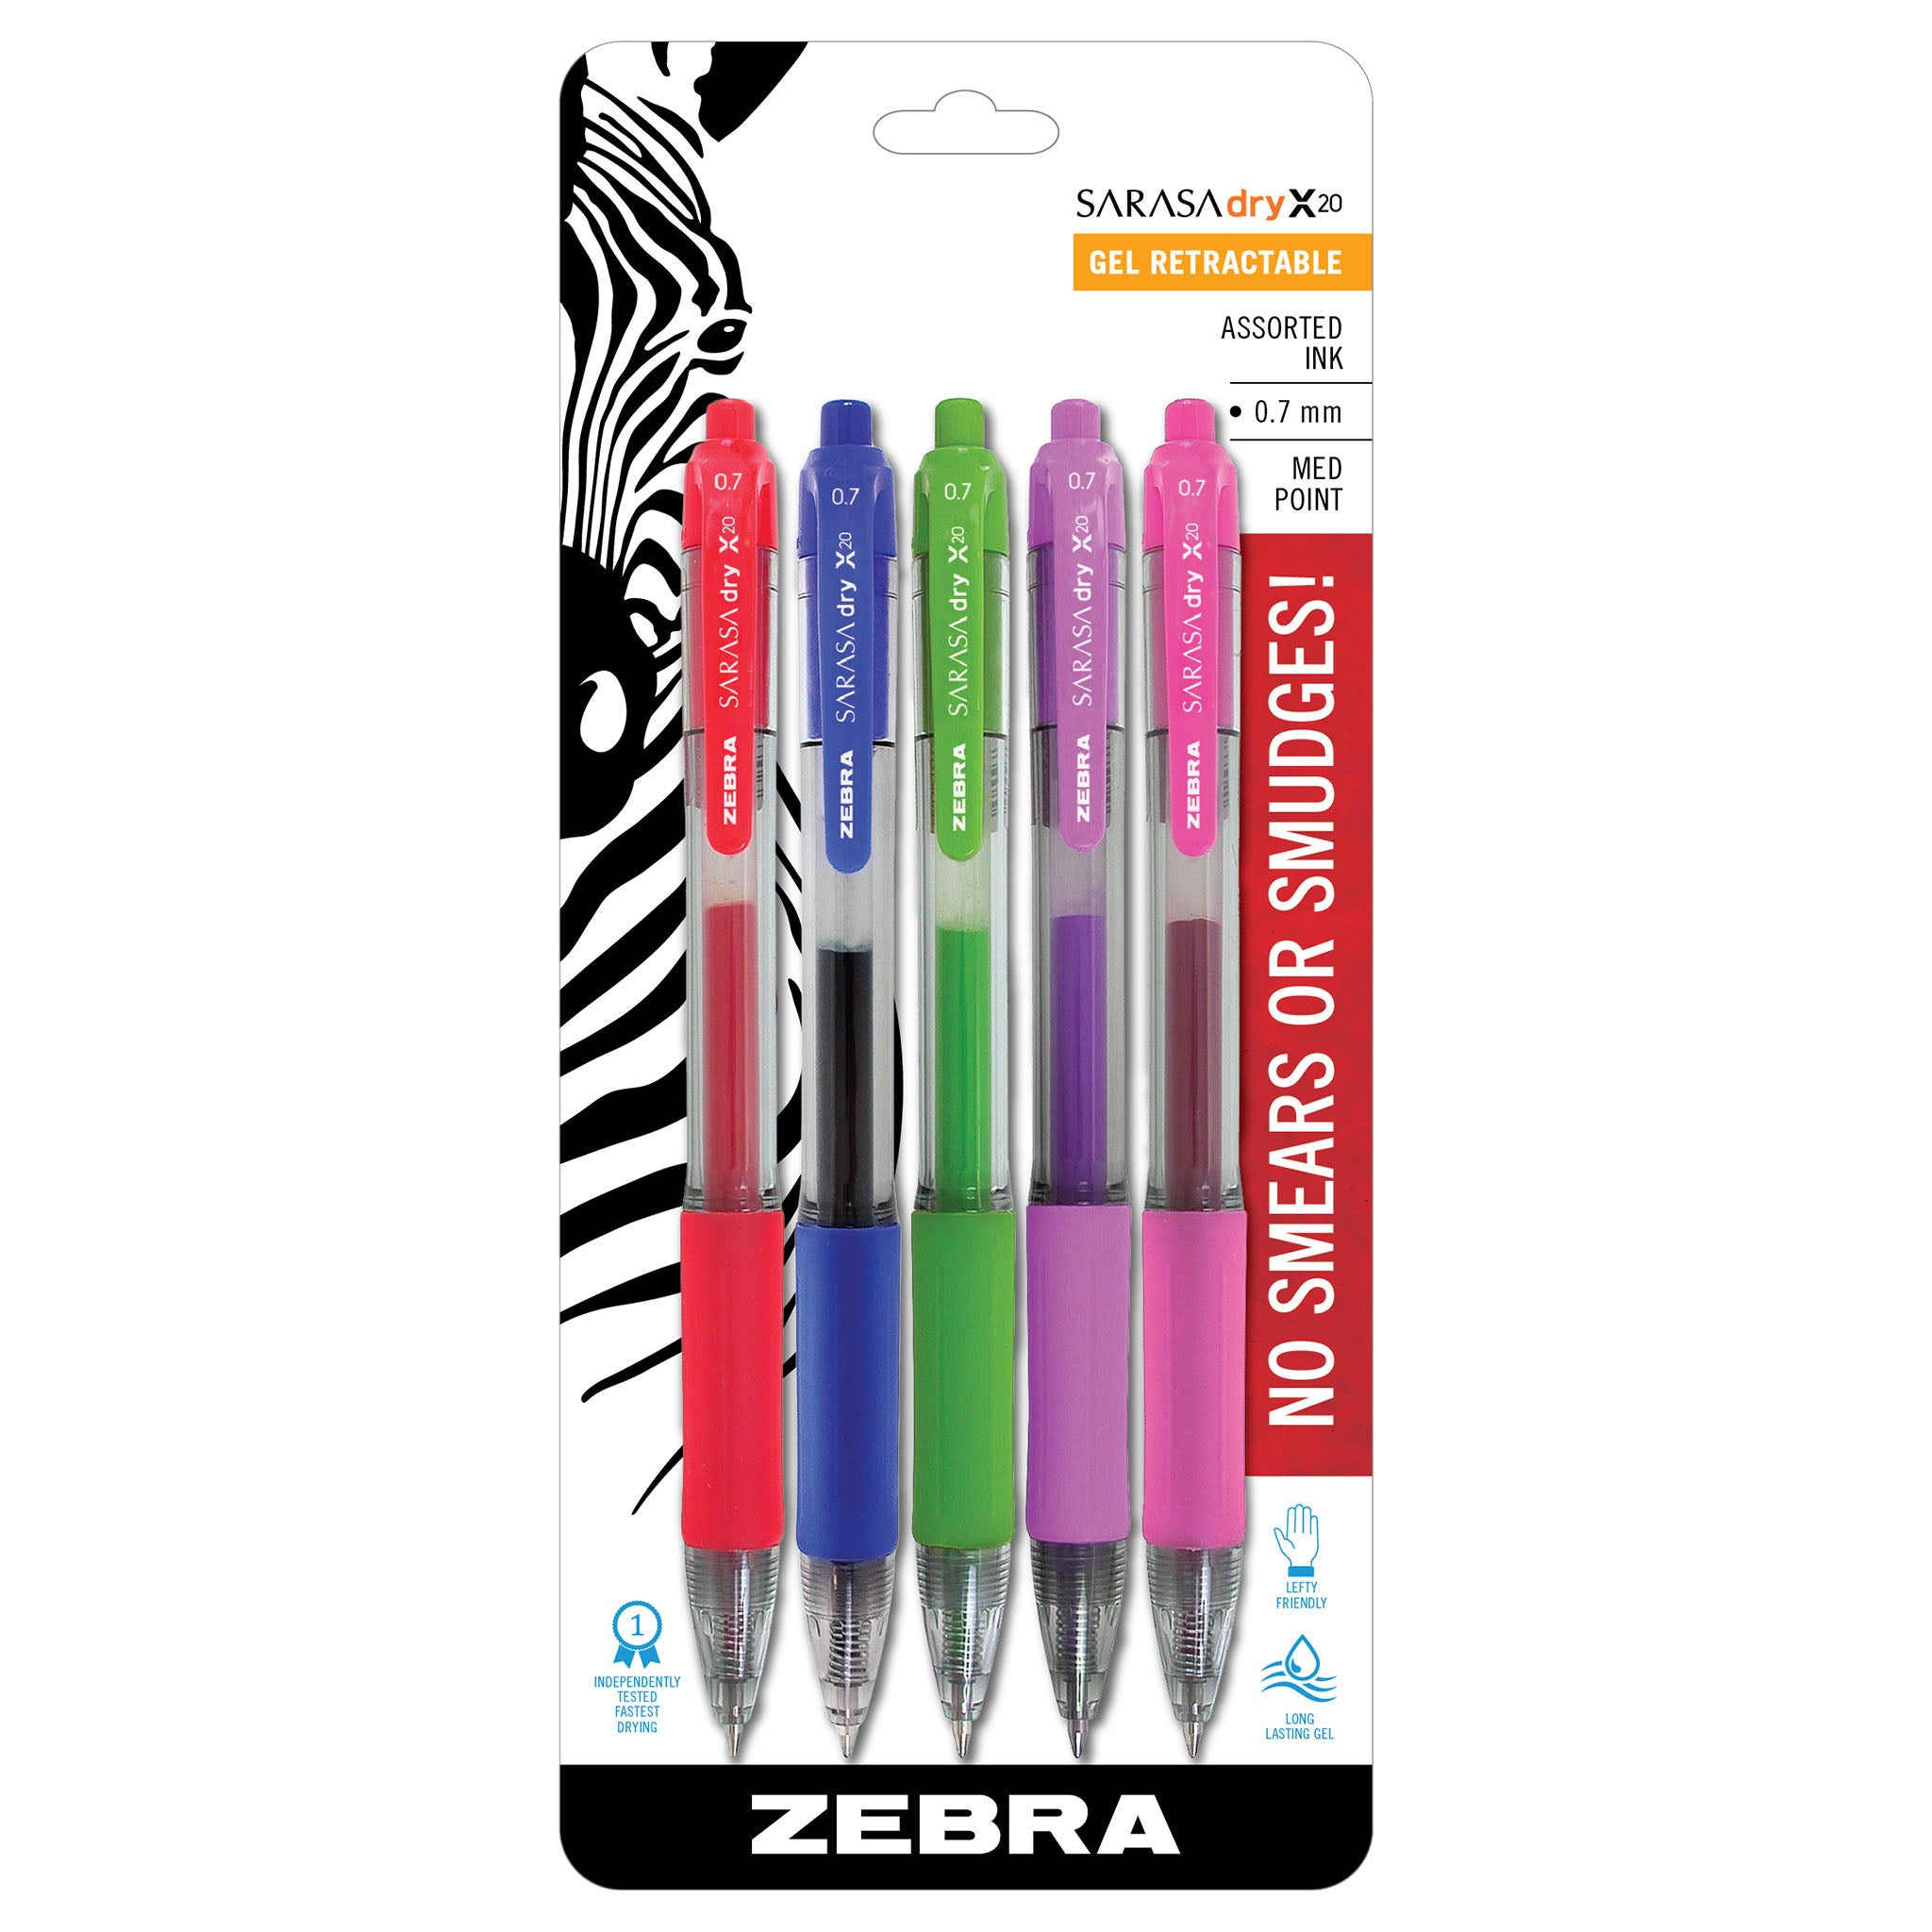 Felt Tip Pens, Pens Fine Point, Pack of 8, Fast Dry, No Smear